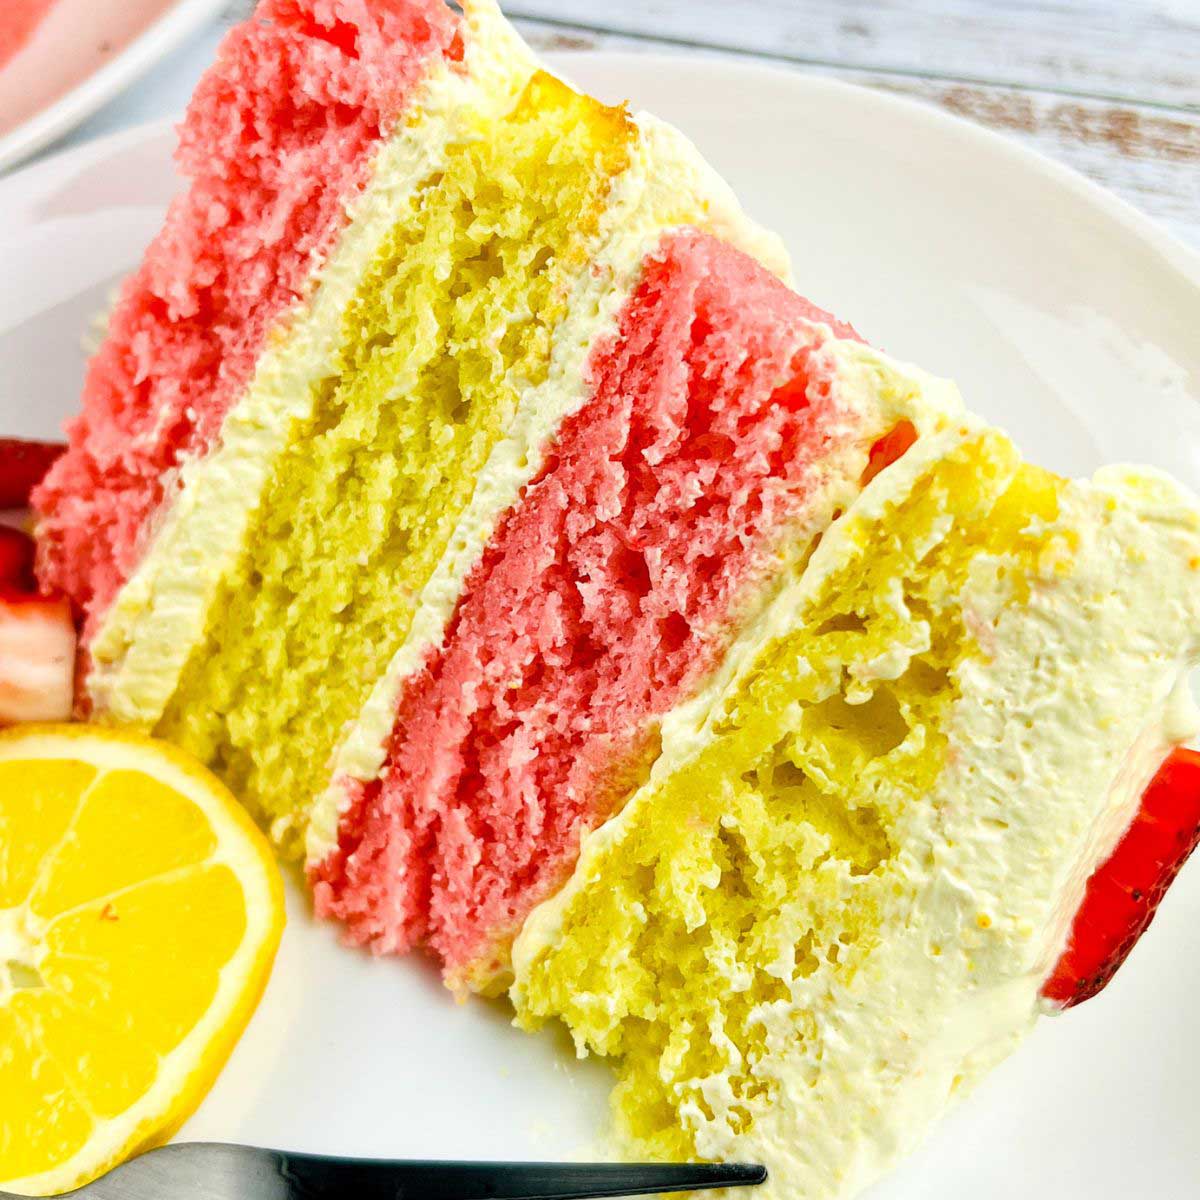 Thumbnail of strawberry lemon layer cake.